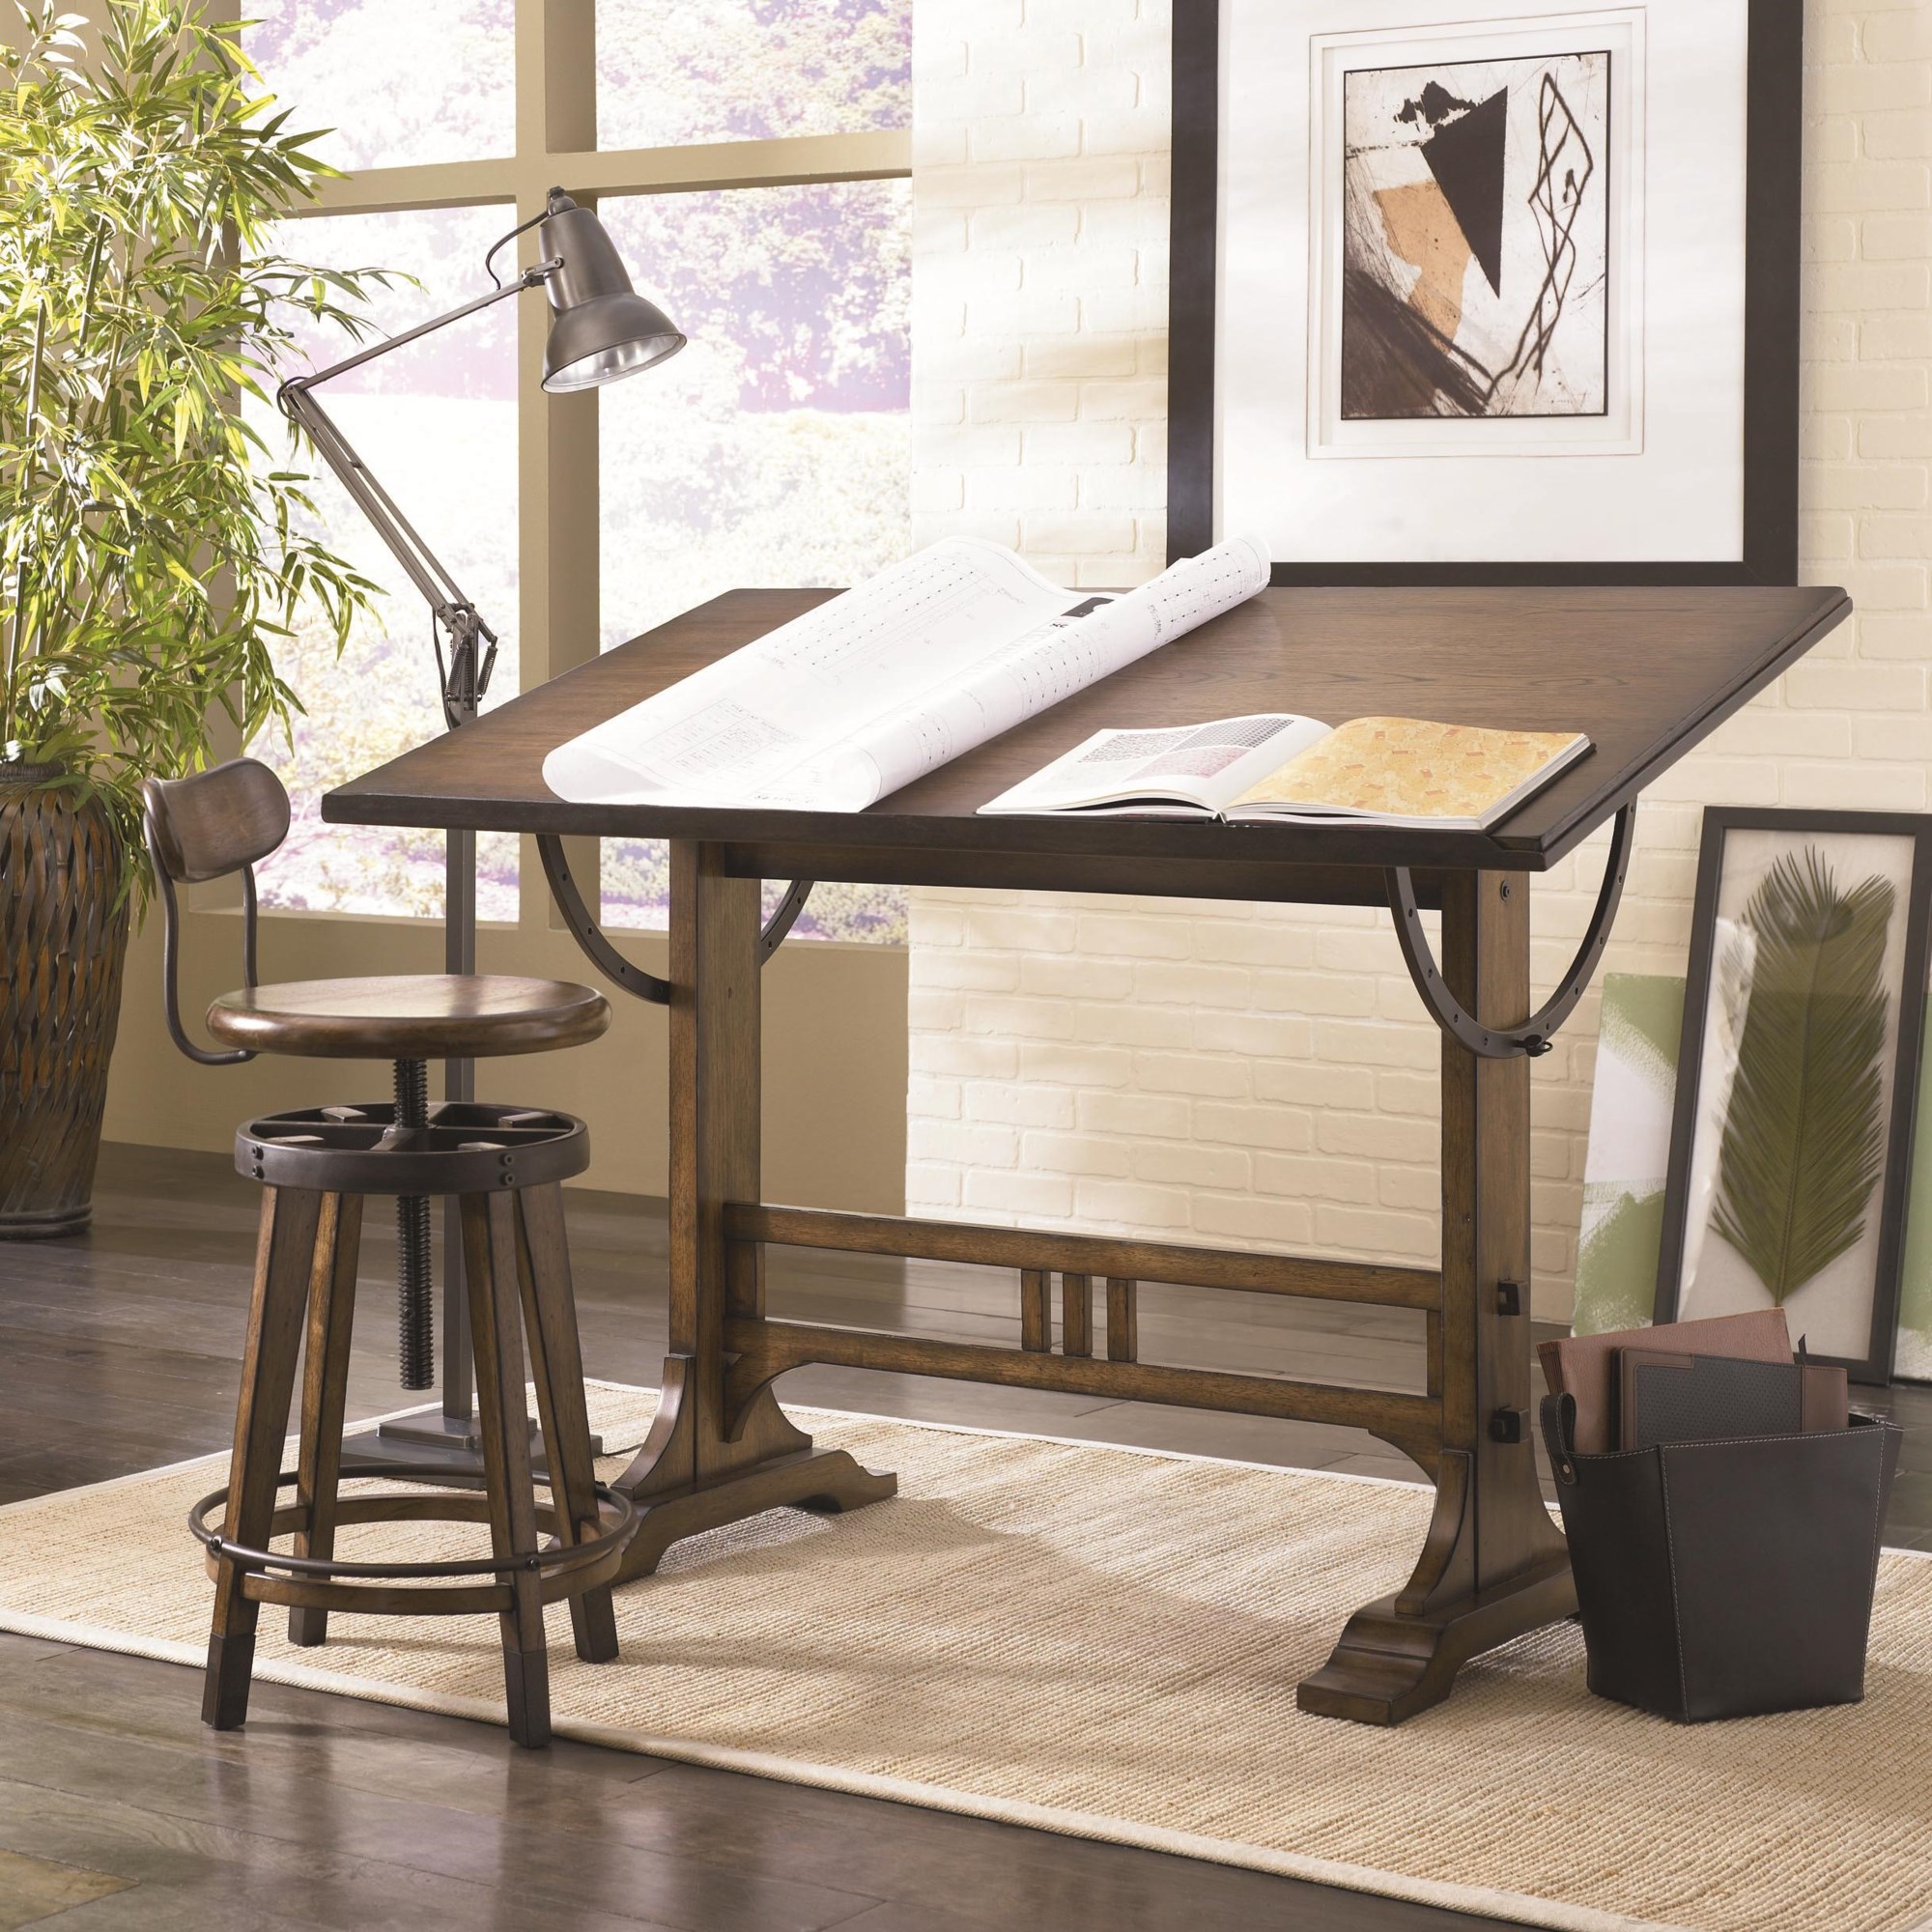 Furniture Weathered | Hammary Table Home Desks Desk - Mattress | Studio & Oak Desk 166-940 Wayside Mission Architect